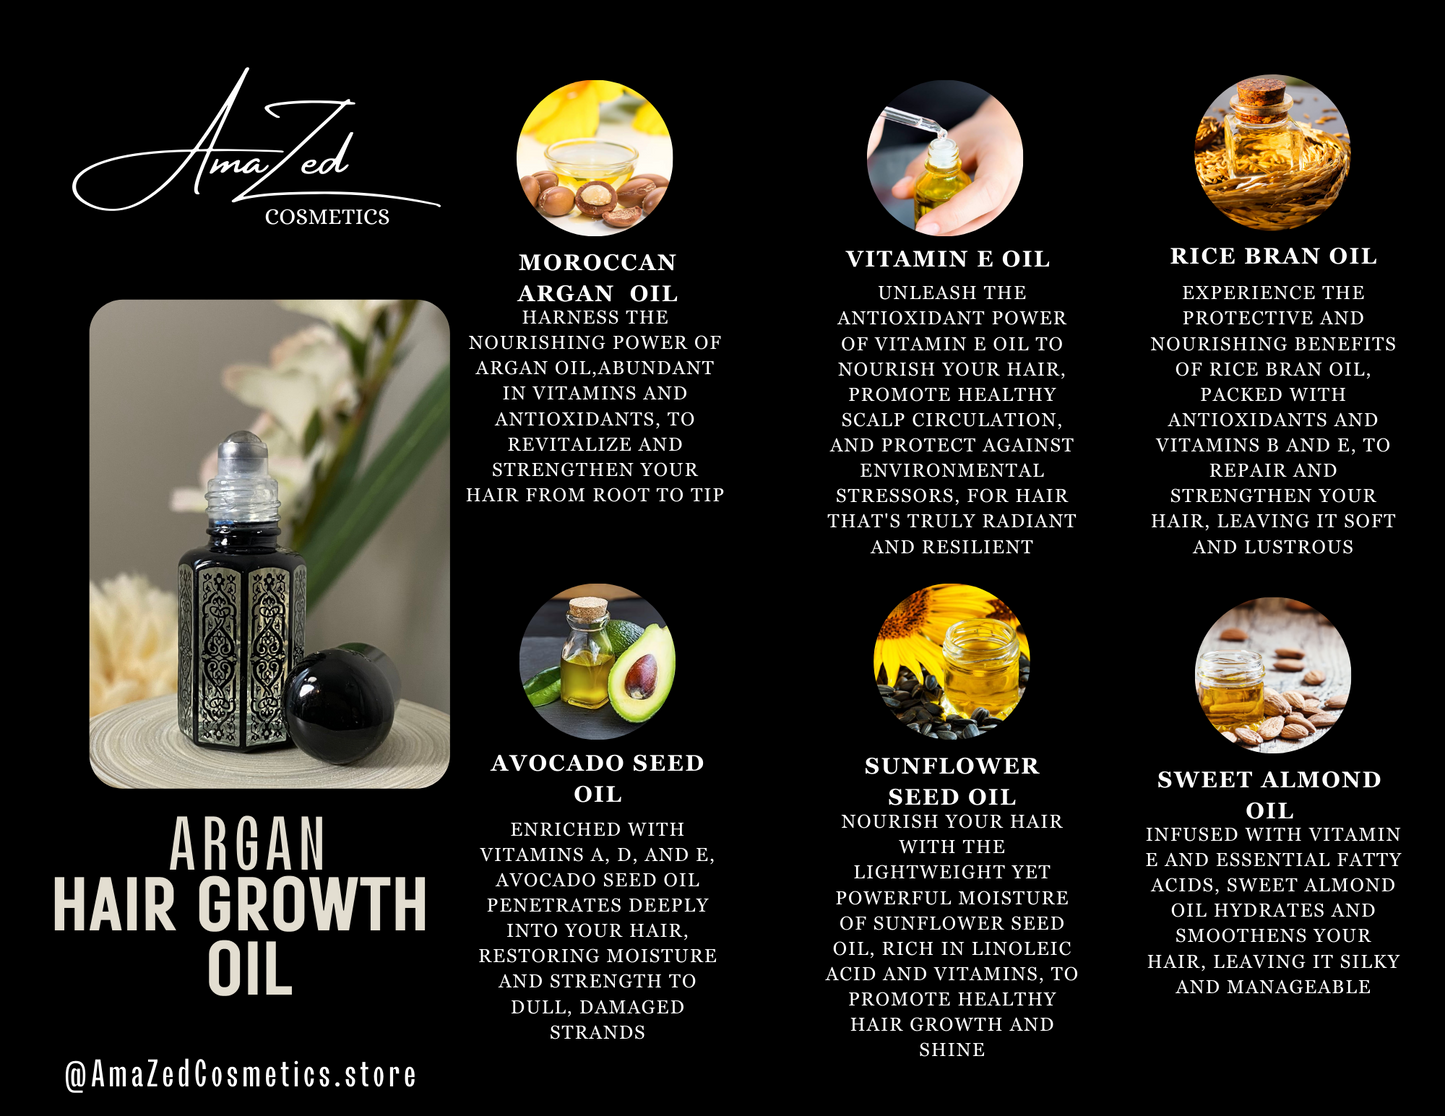 Argan Hair Growth Oil